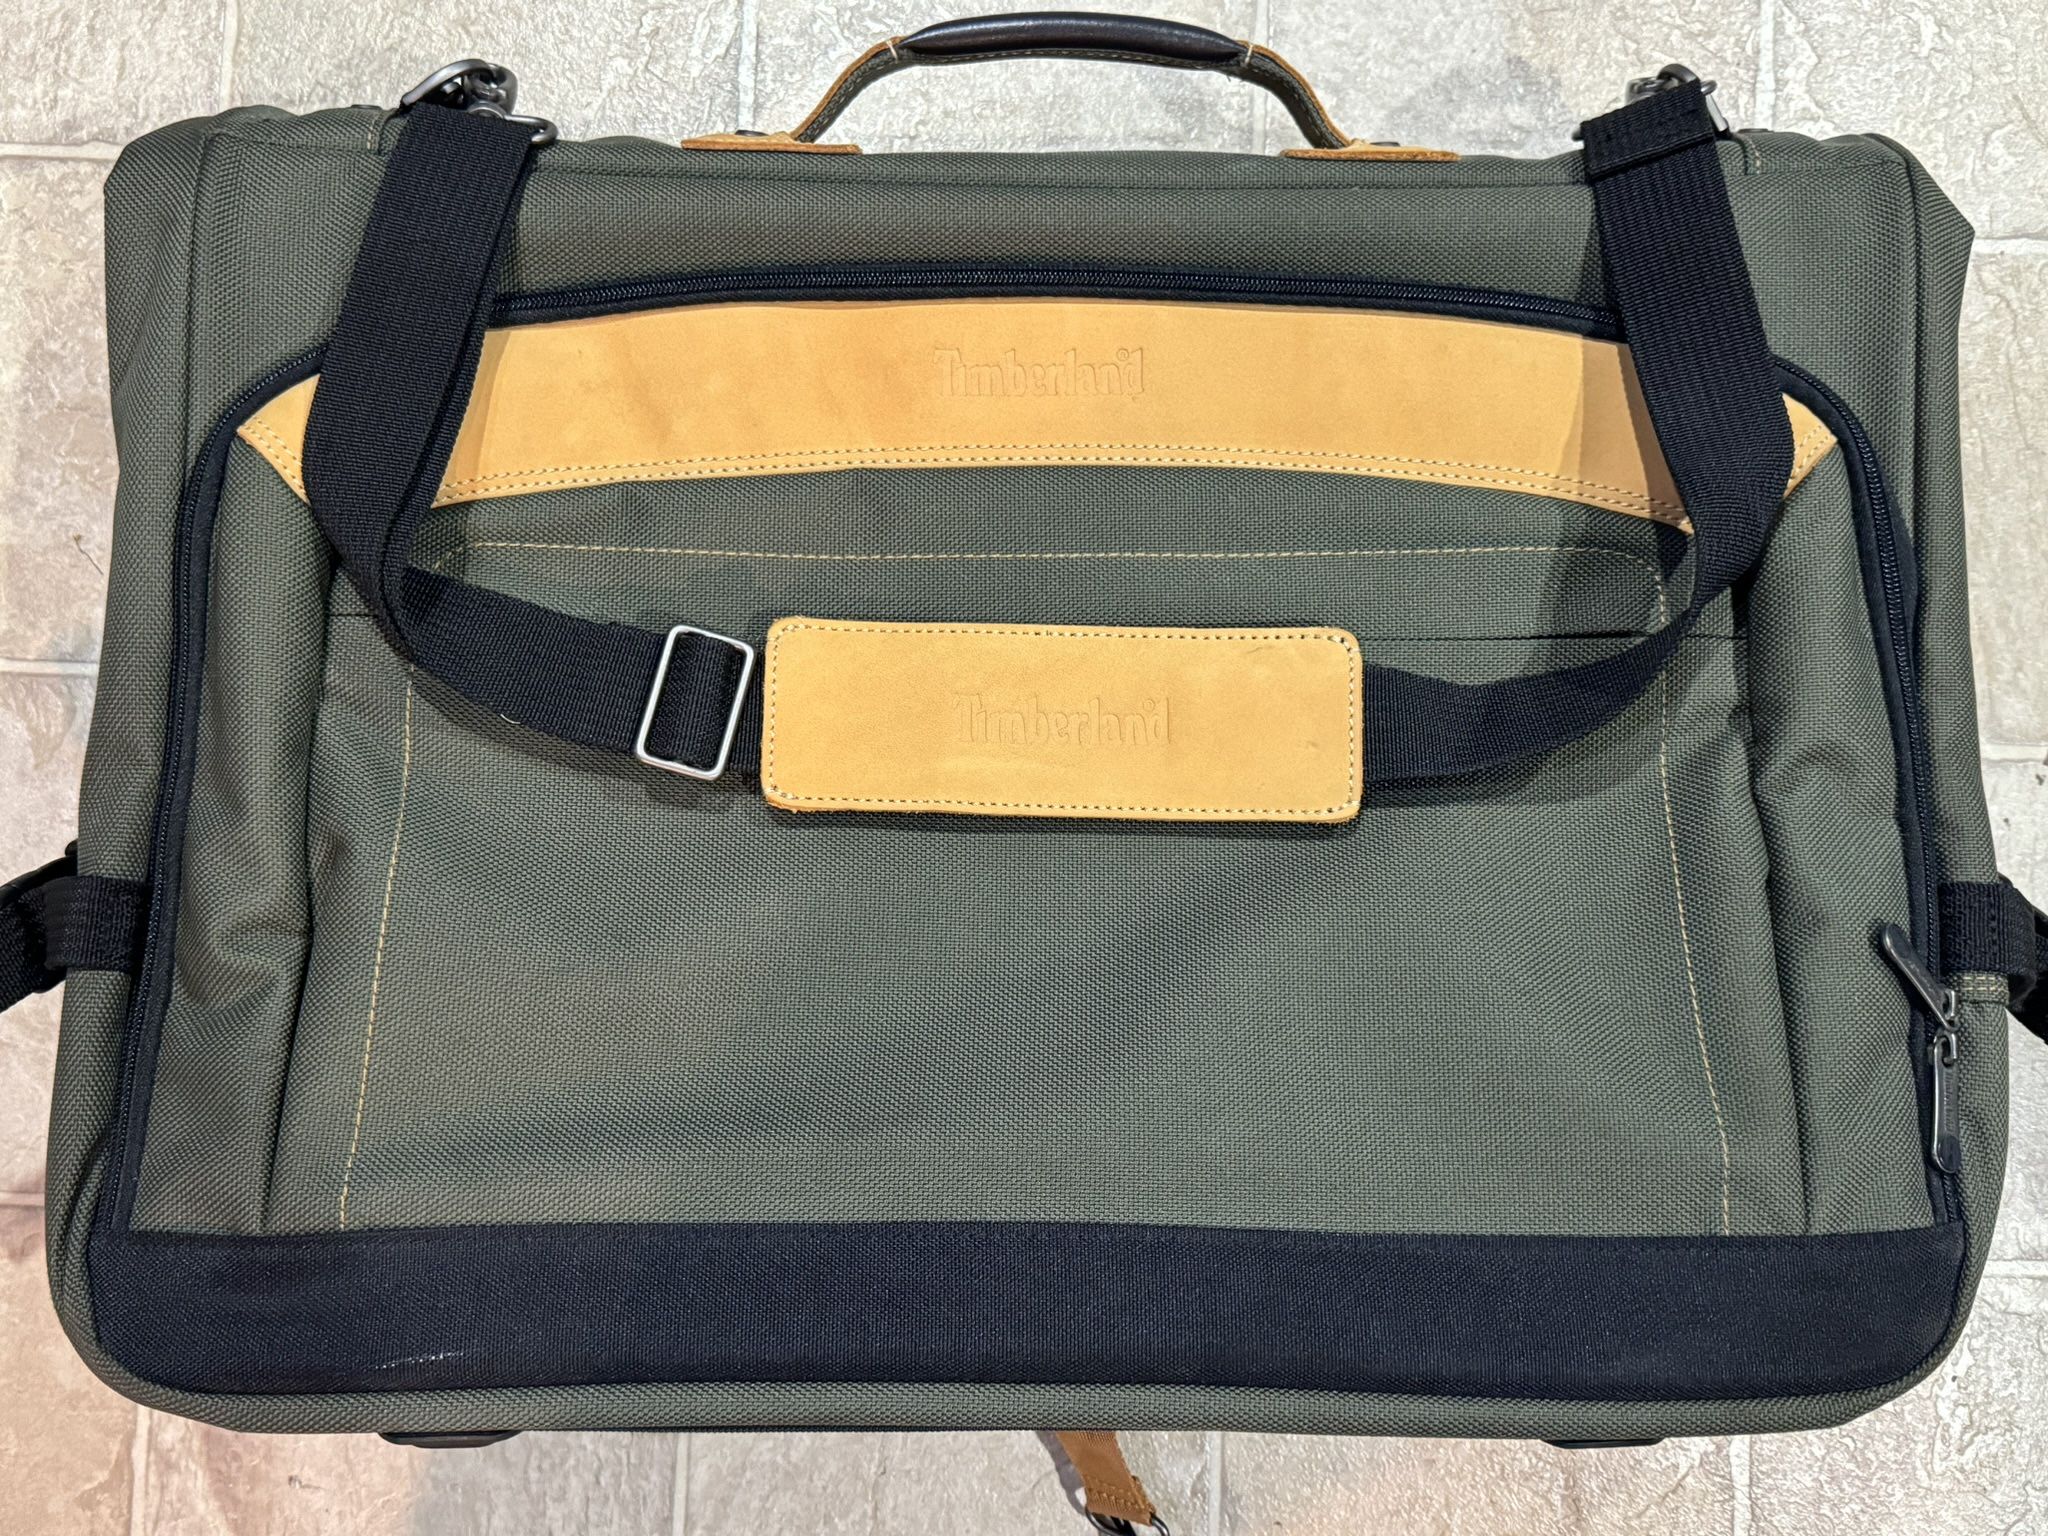 Timberland Large Garment Travel Bag